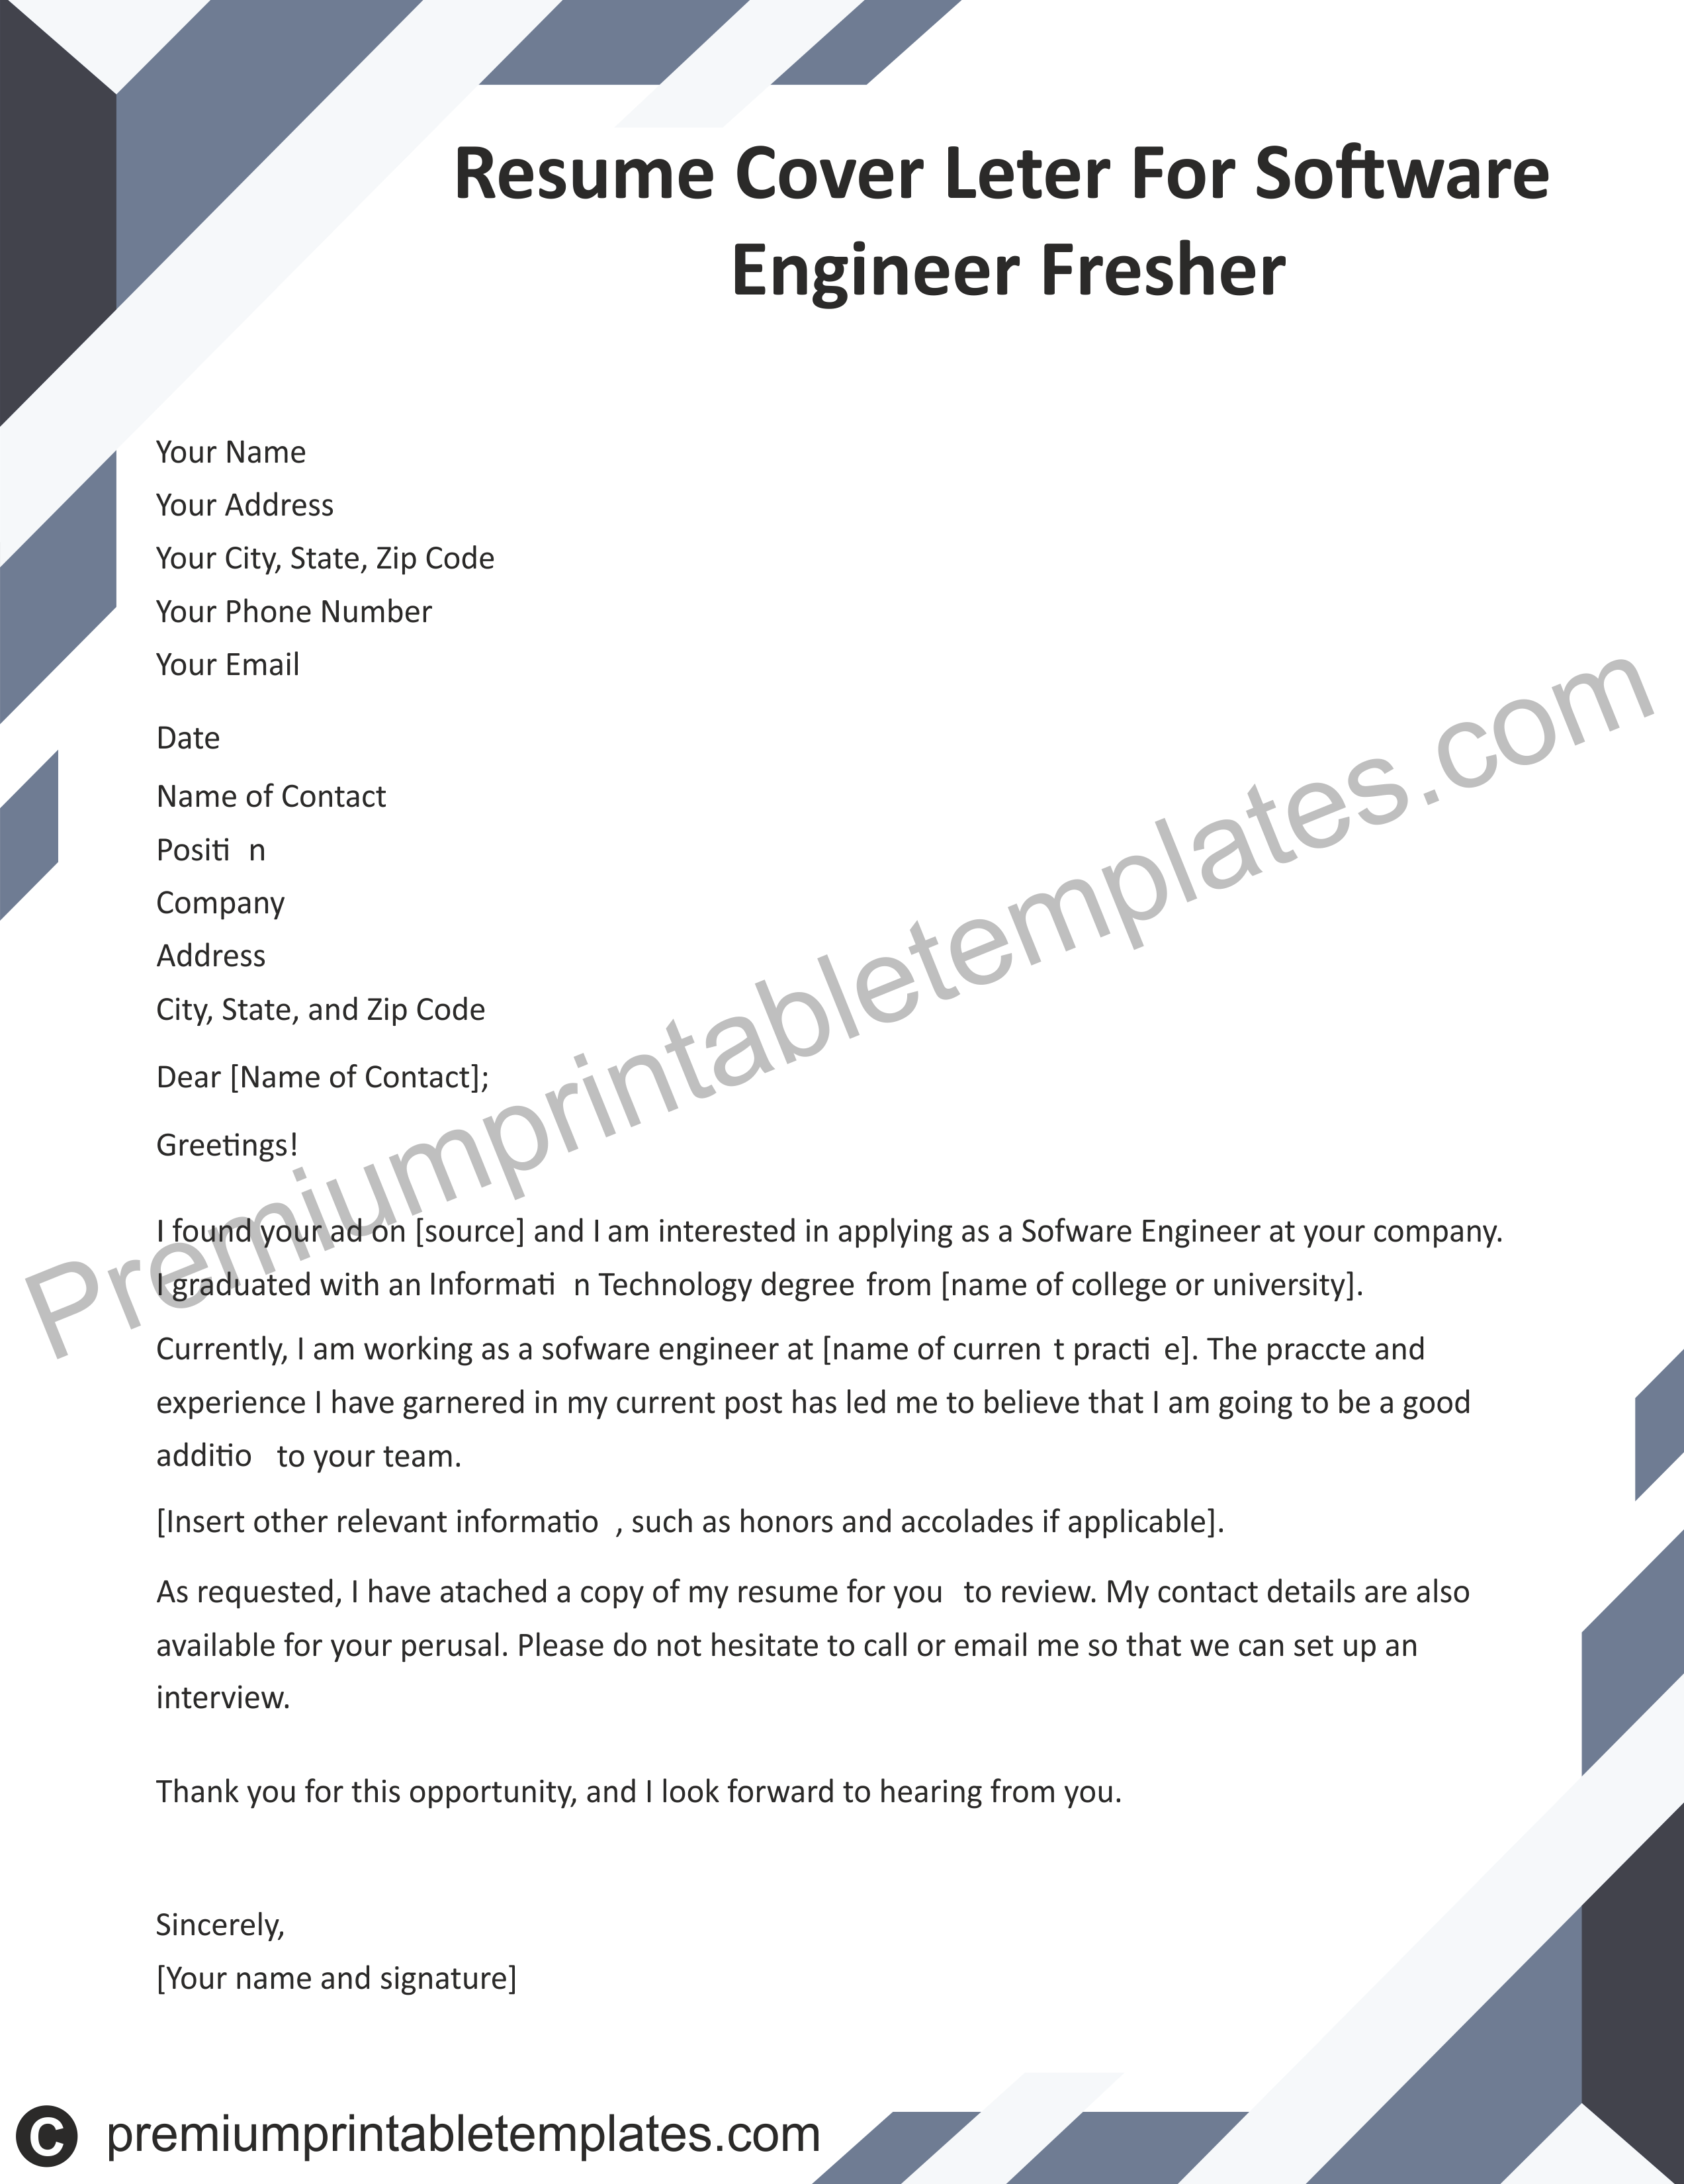 Cover Letter For Resume Fresher Software Engineer | Cover Letter